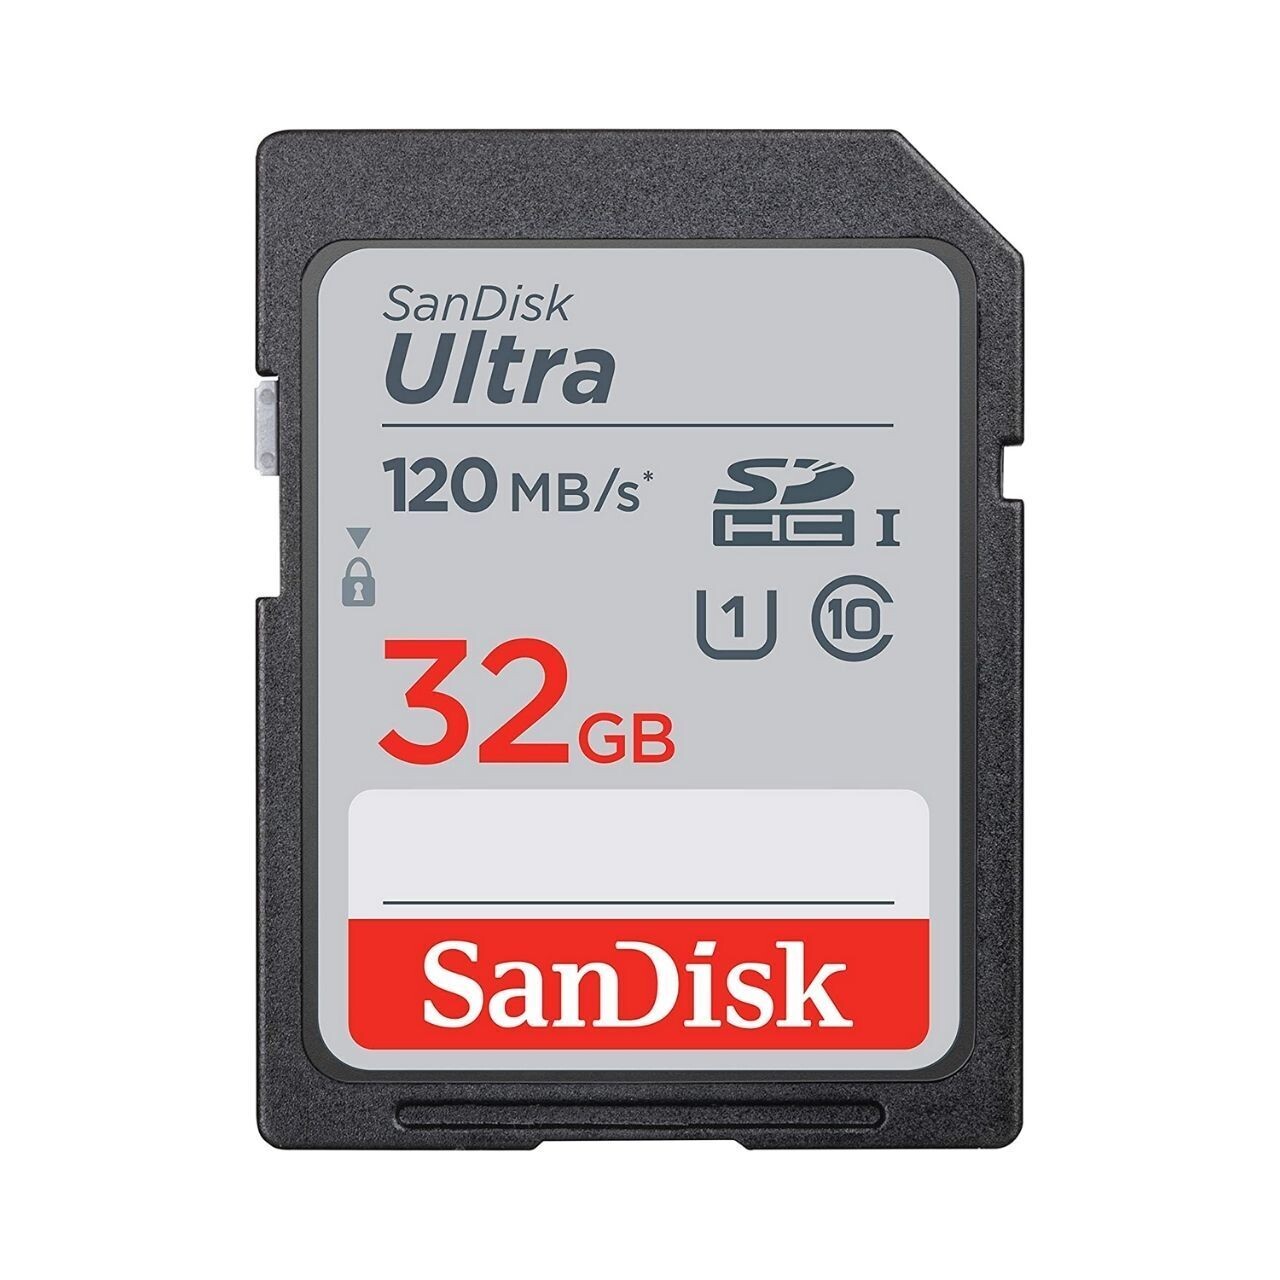 SanDisk SDHC 32GB ULTRA 120MB/S